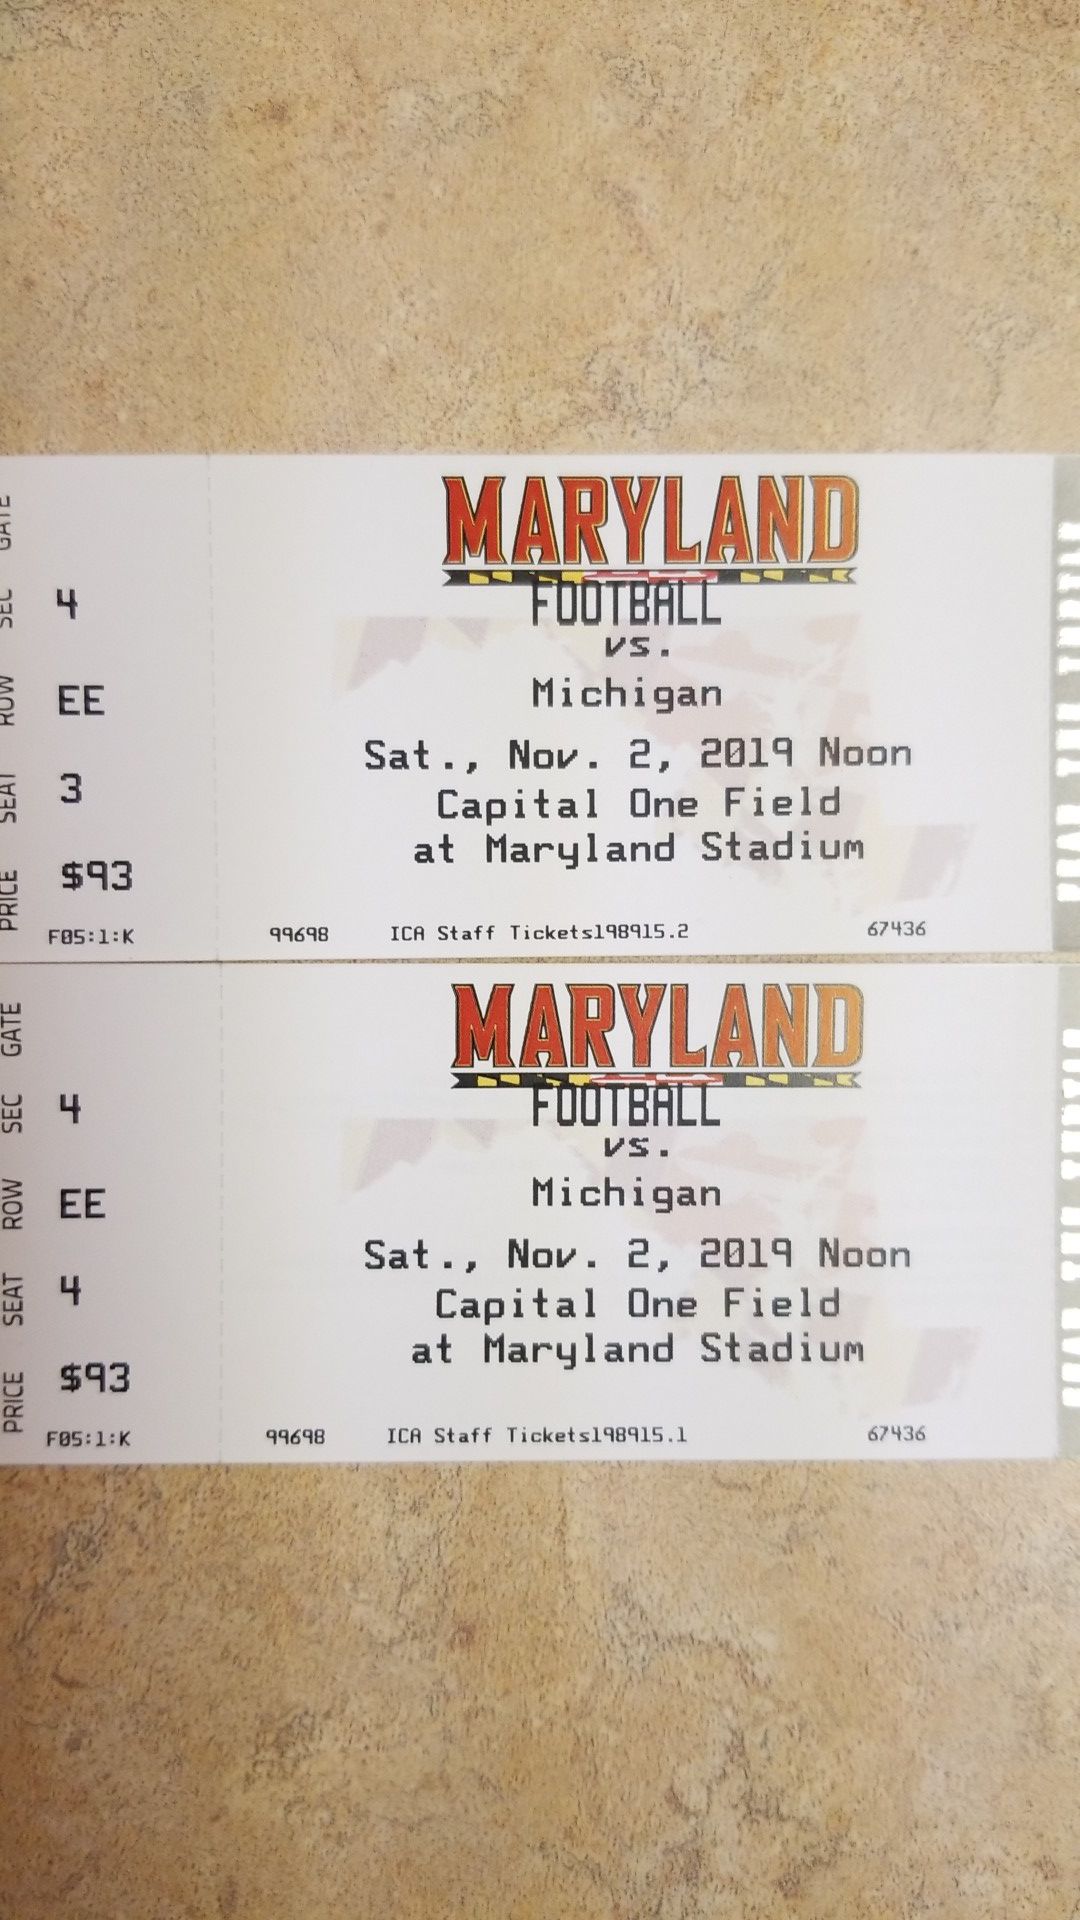 Maryland vs Michigan Football tickets